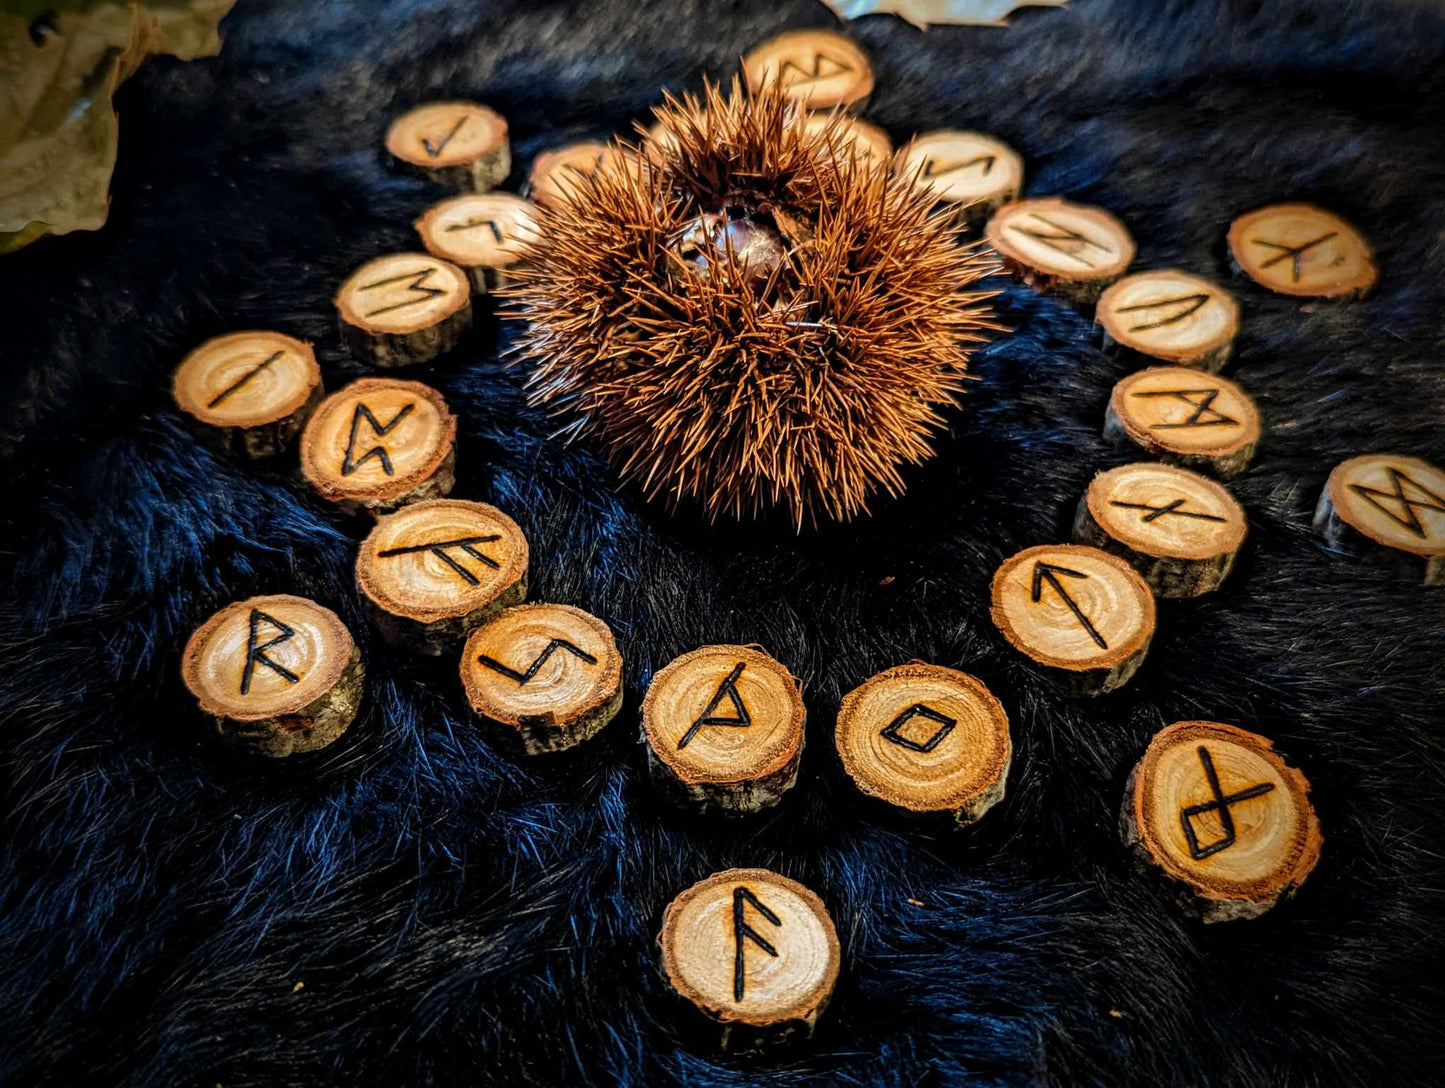 Set of 24 Chestnut Elder Futhark Runes Hand Cut and Burned Natural Wood Runes